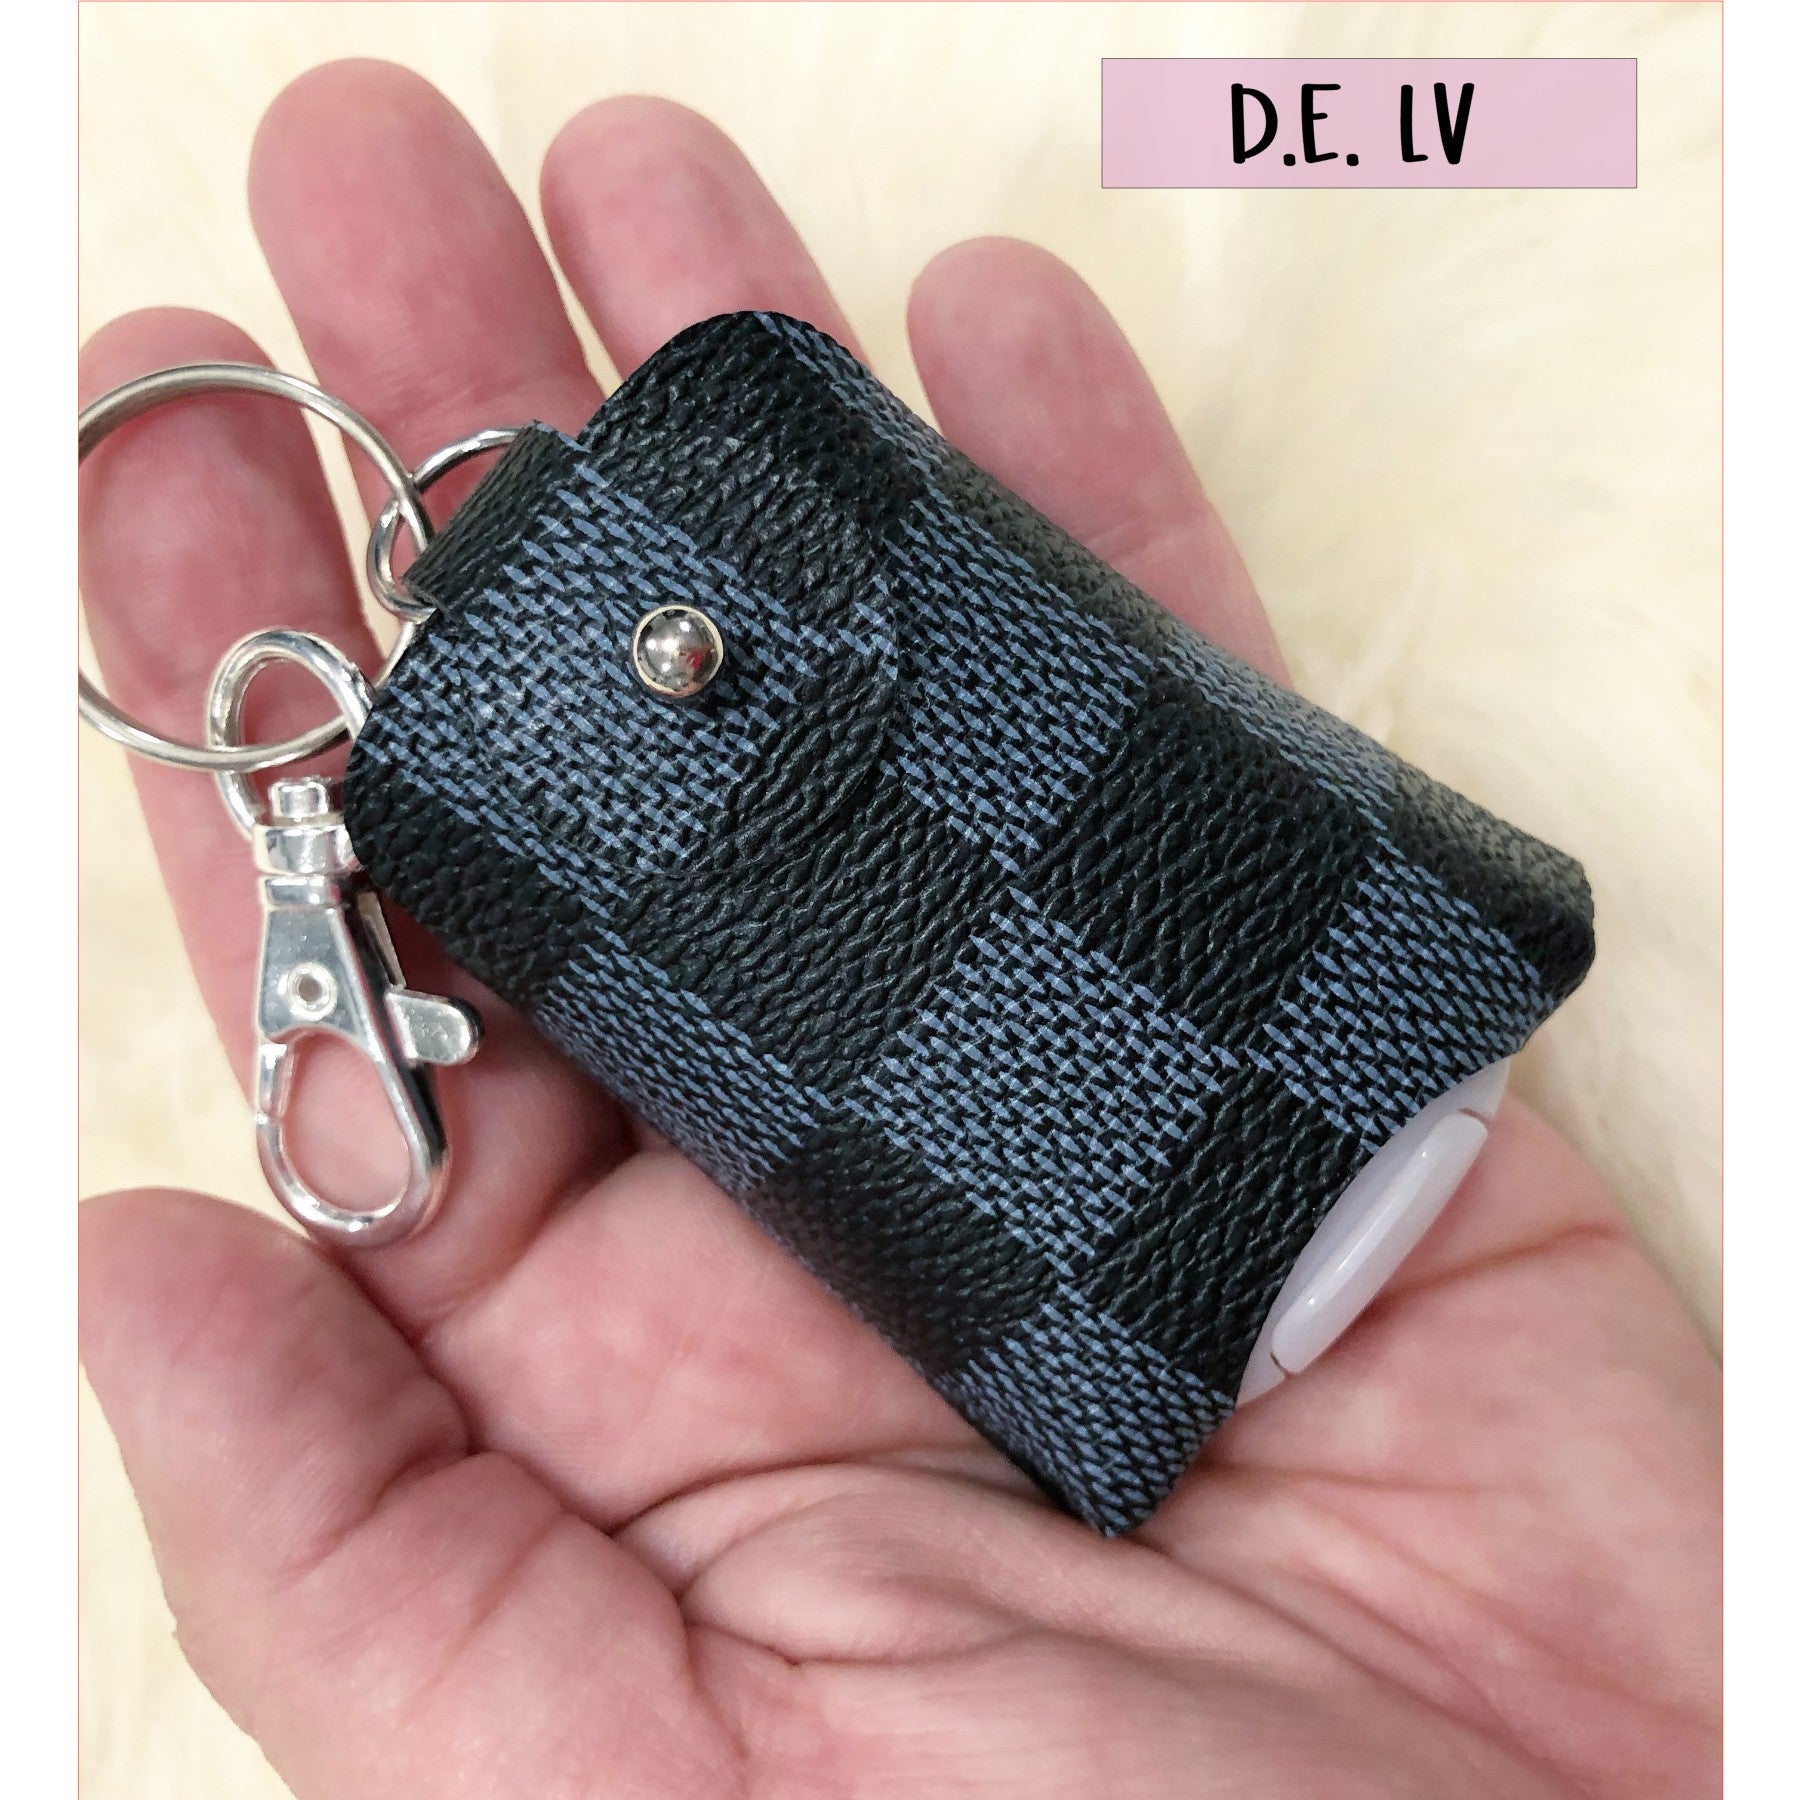 Louis Vuitton car key holder graphite